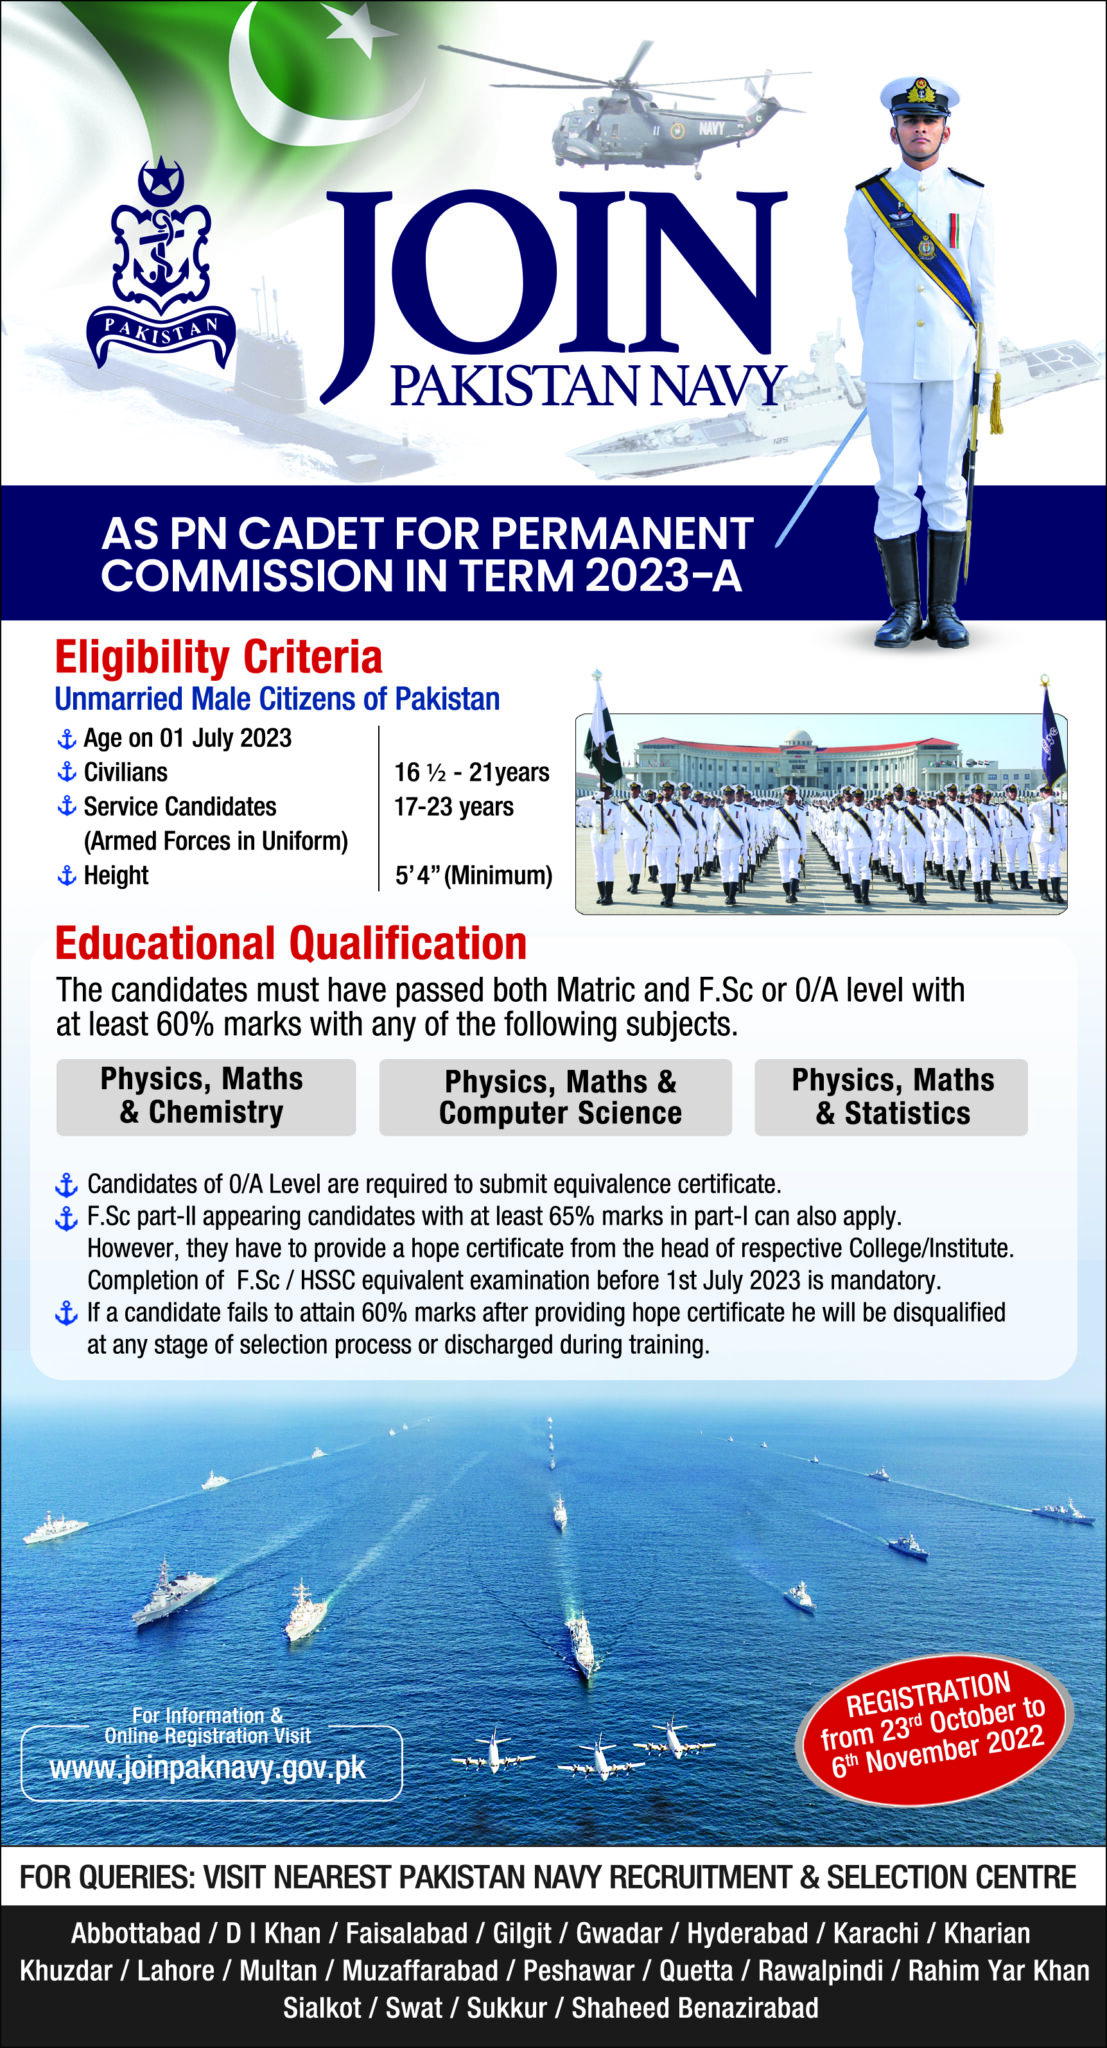 Pak Navy Jobs 2022 – Latest Government Jobs